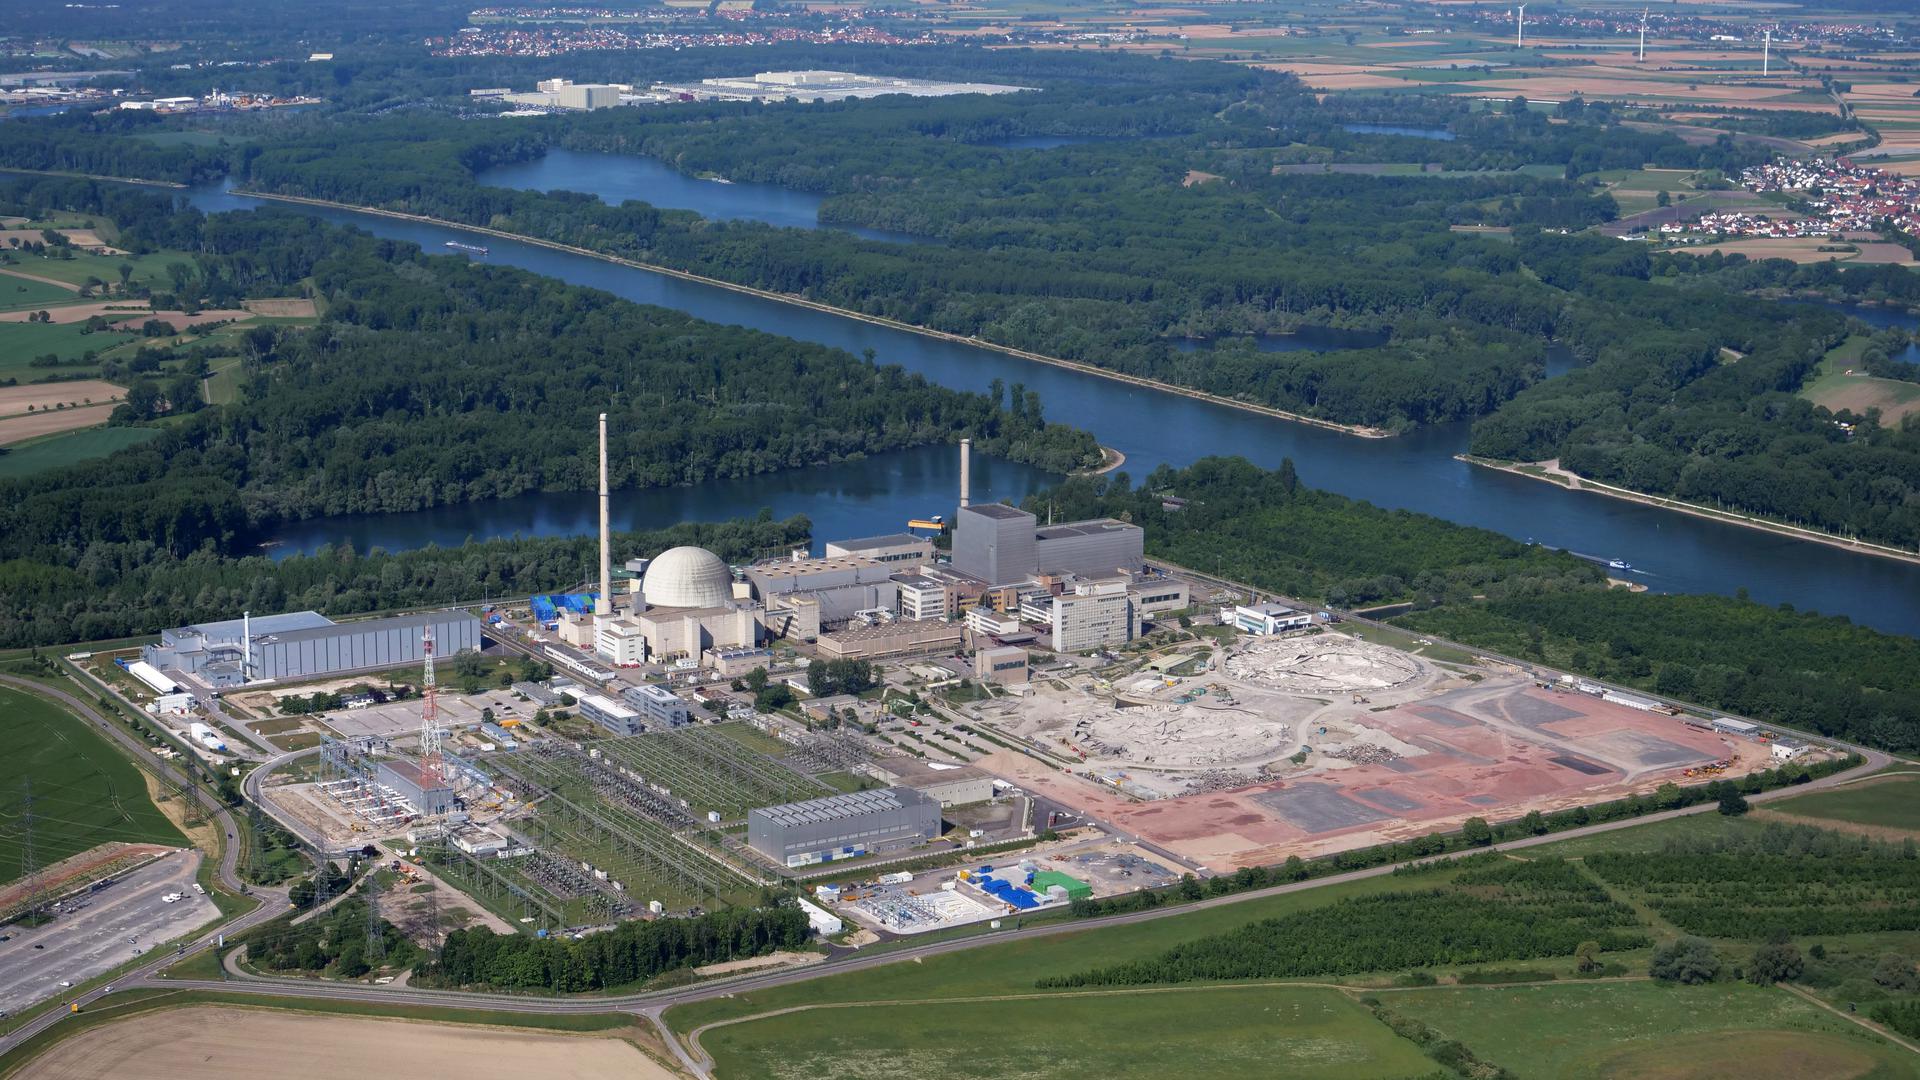 Philippsburg Kernkraftwerk ohne Kuehtuerme
Luftbild vom 16.05.2020
Peter Sandbiller
Luftbruchsal